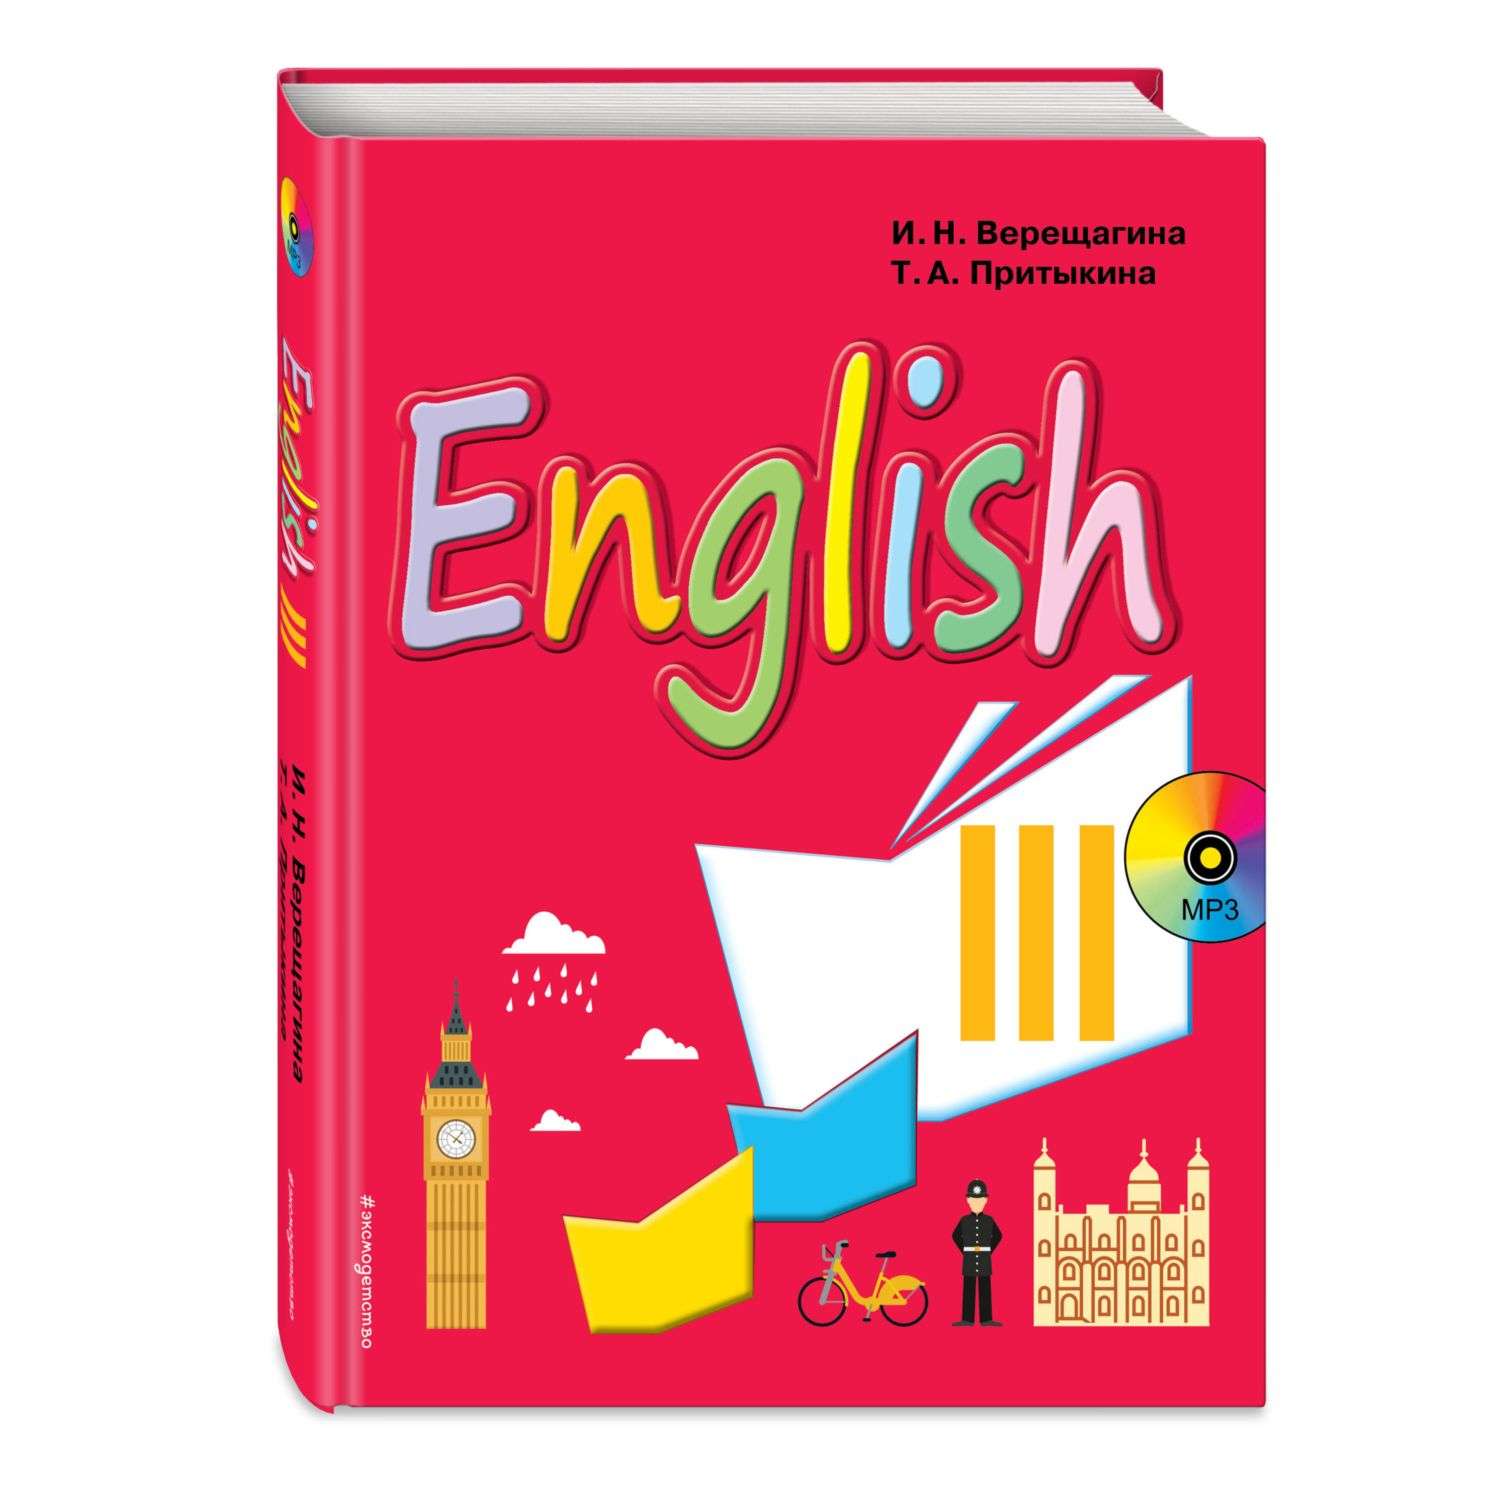 Учебник английского. Ученик на английском языке. Английский язык. Учебник. Индийский язык учебник.